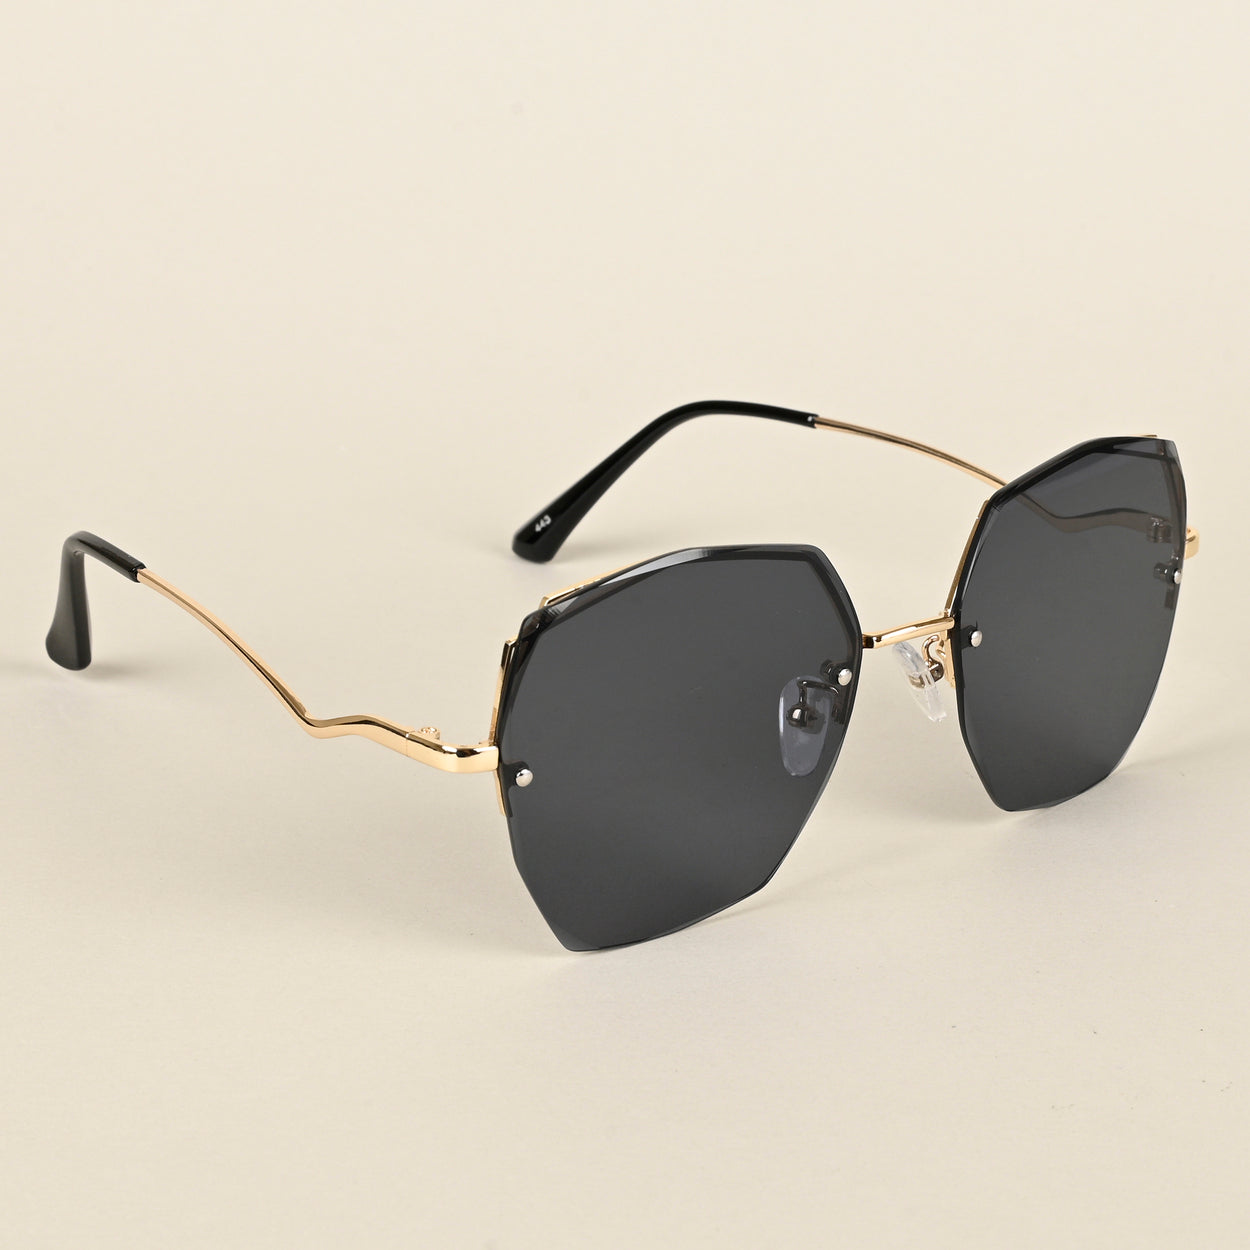 Voyage Black Geometric Sunglasses for Women (443MG4334)